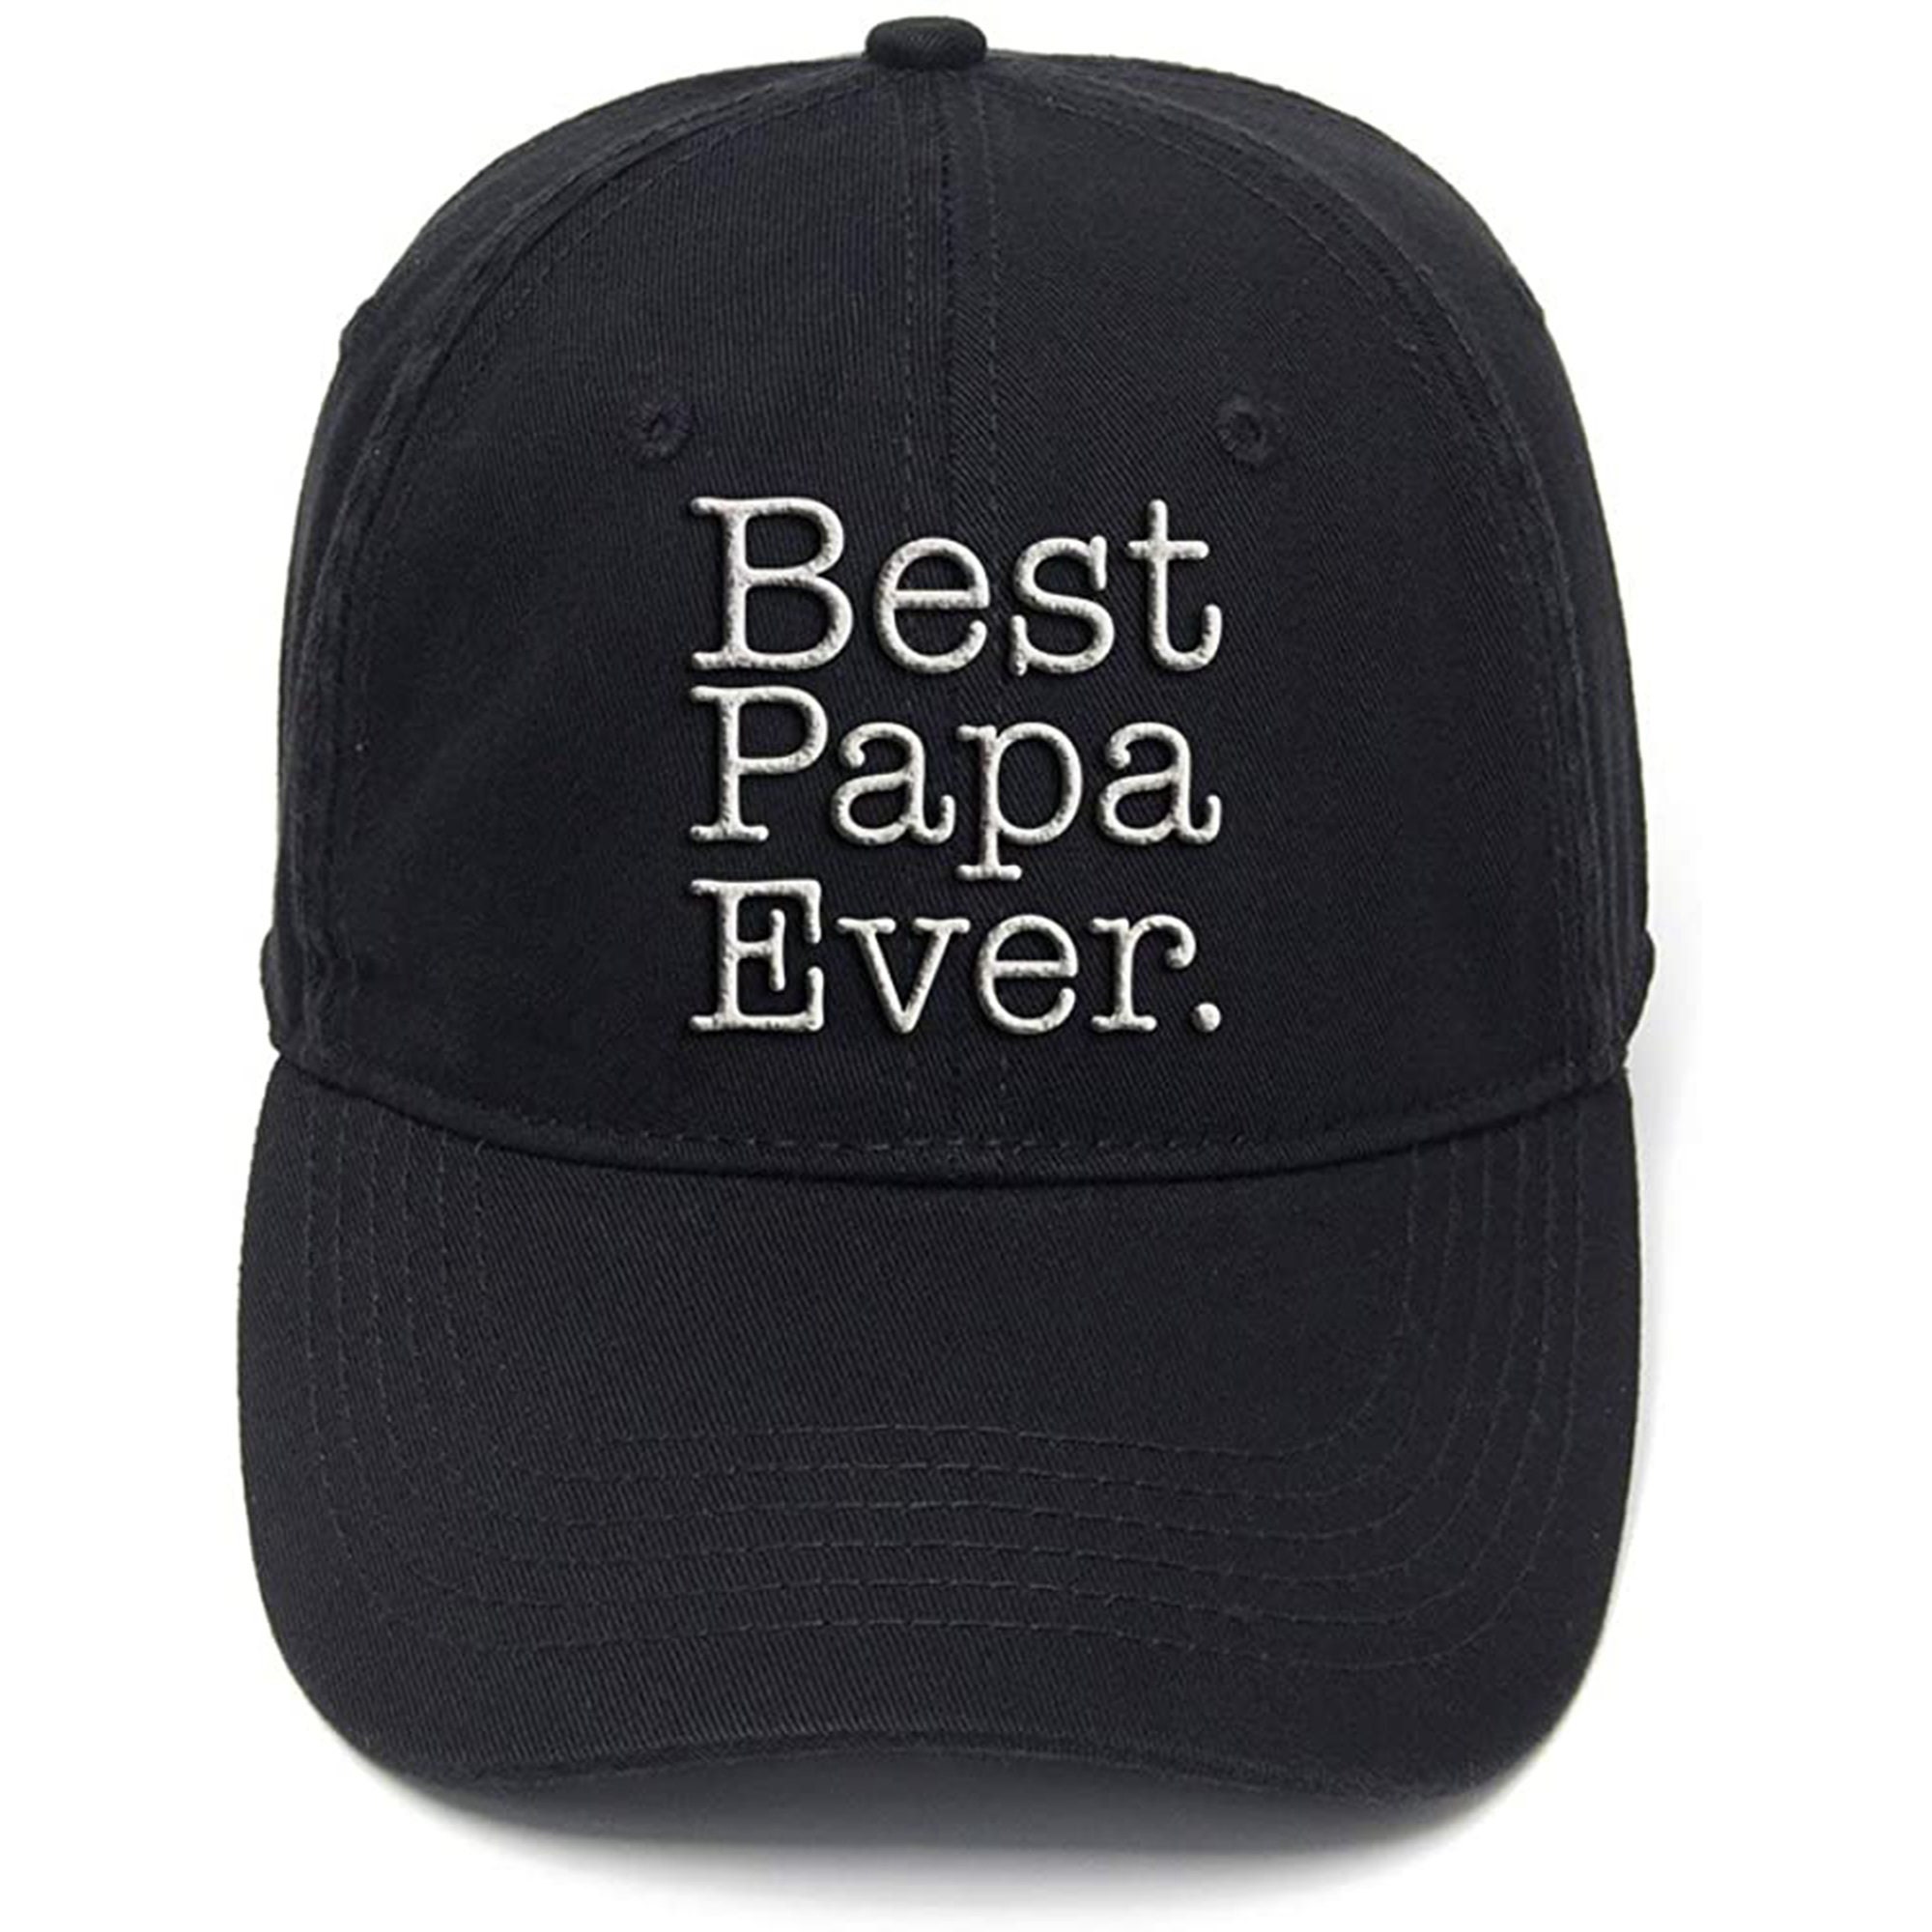 Ladies Baseball Cap,Worlds Best Papa T Sandwich Peak Cap Adjustable Black Sport Cap 